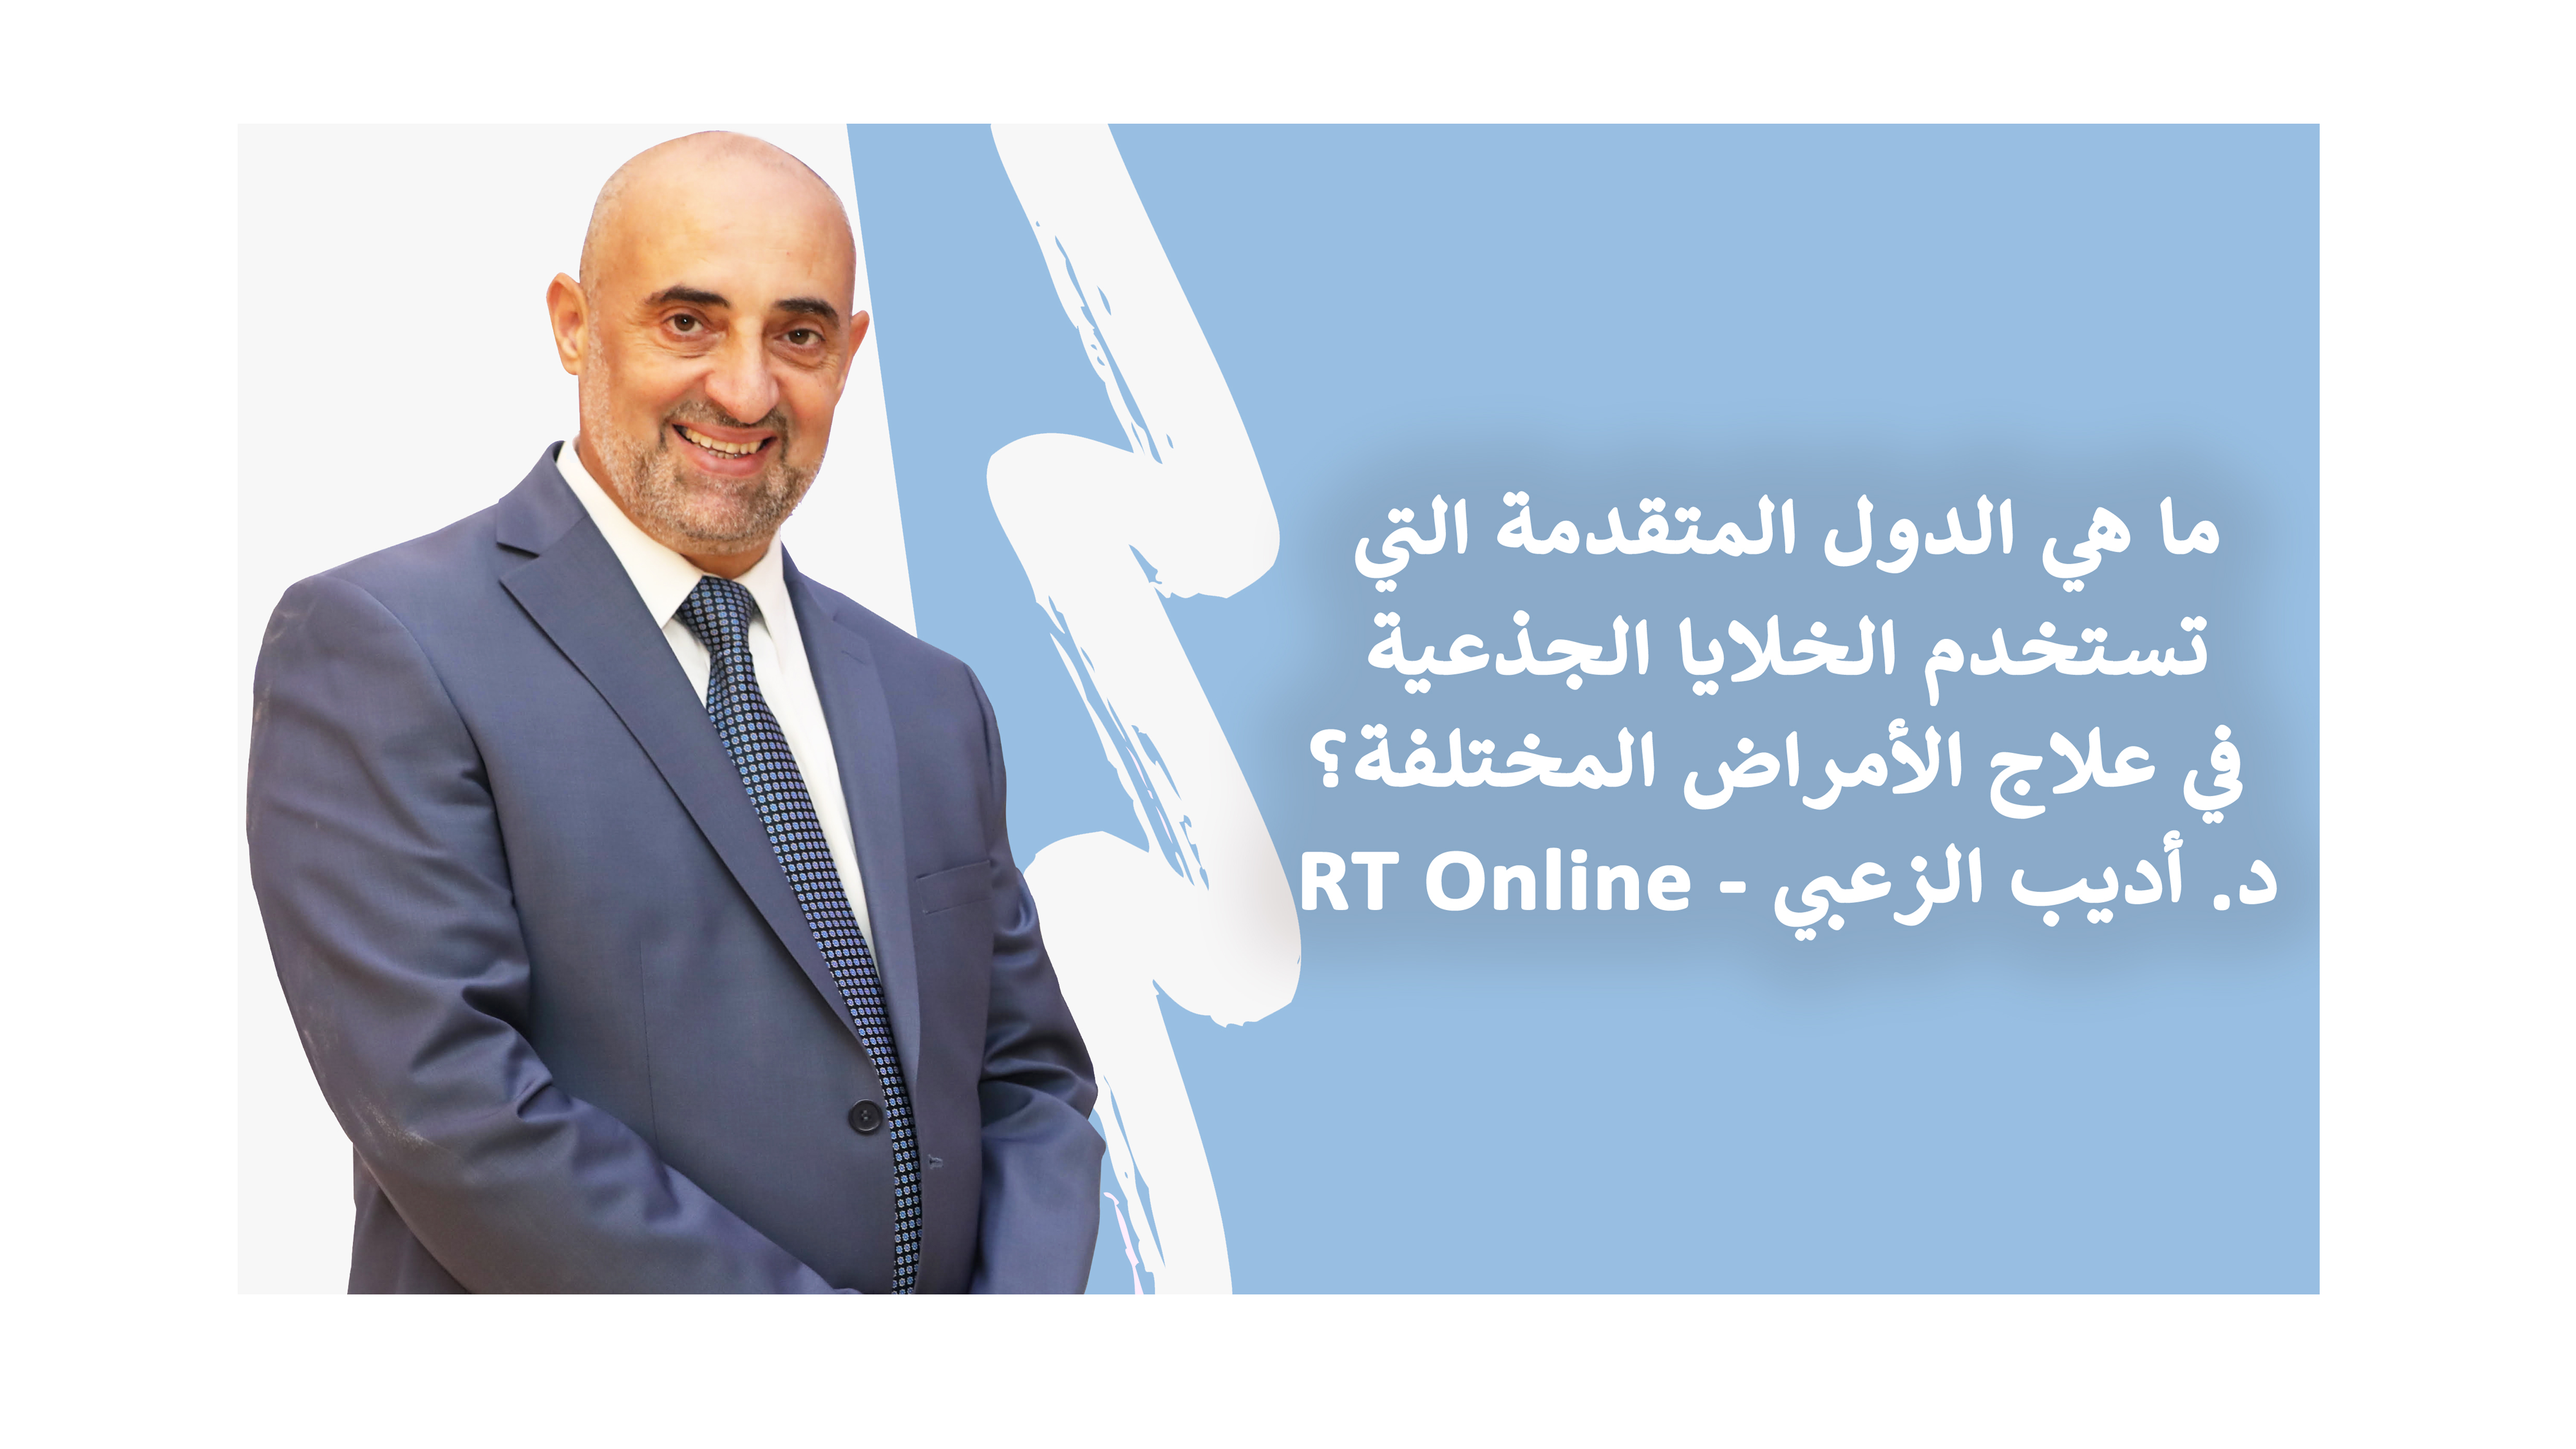 rt online - dr adeeb al zoubi